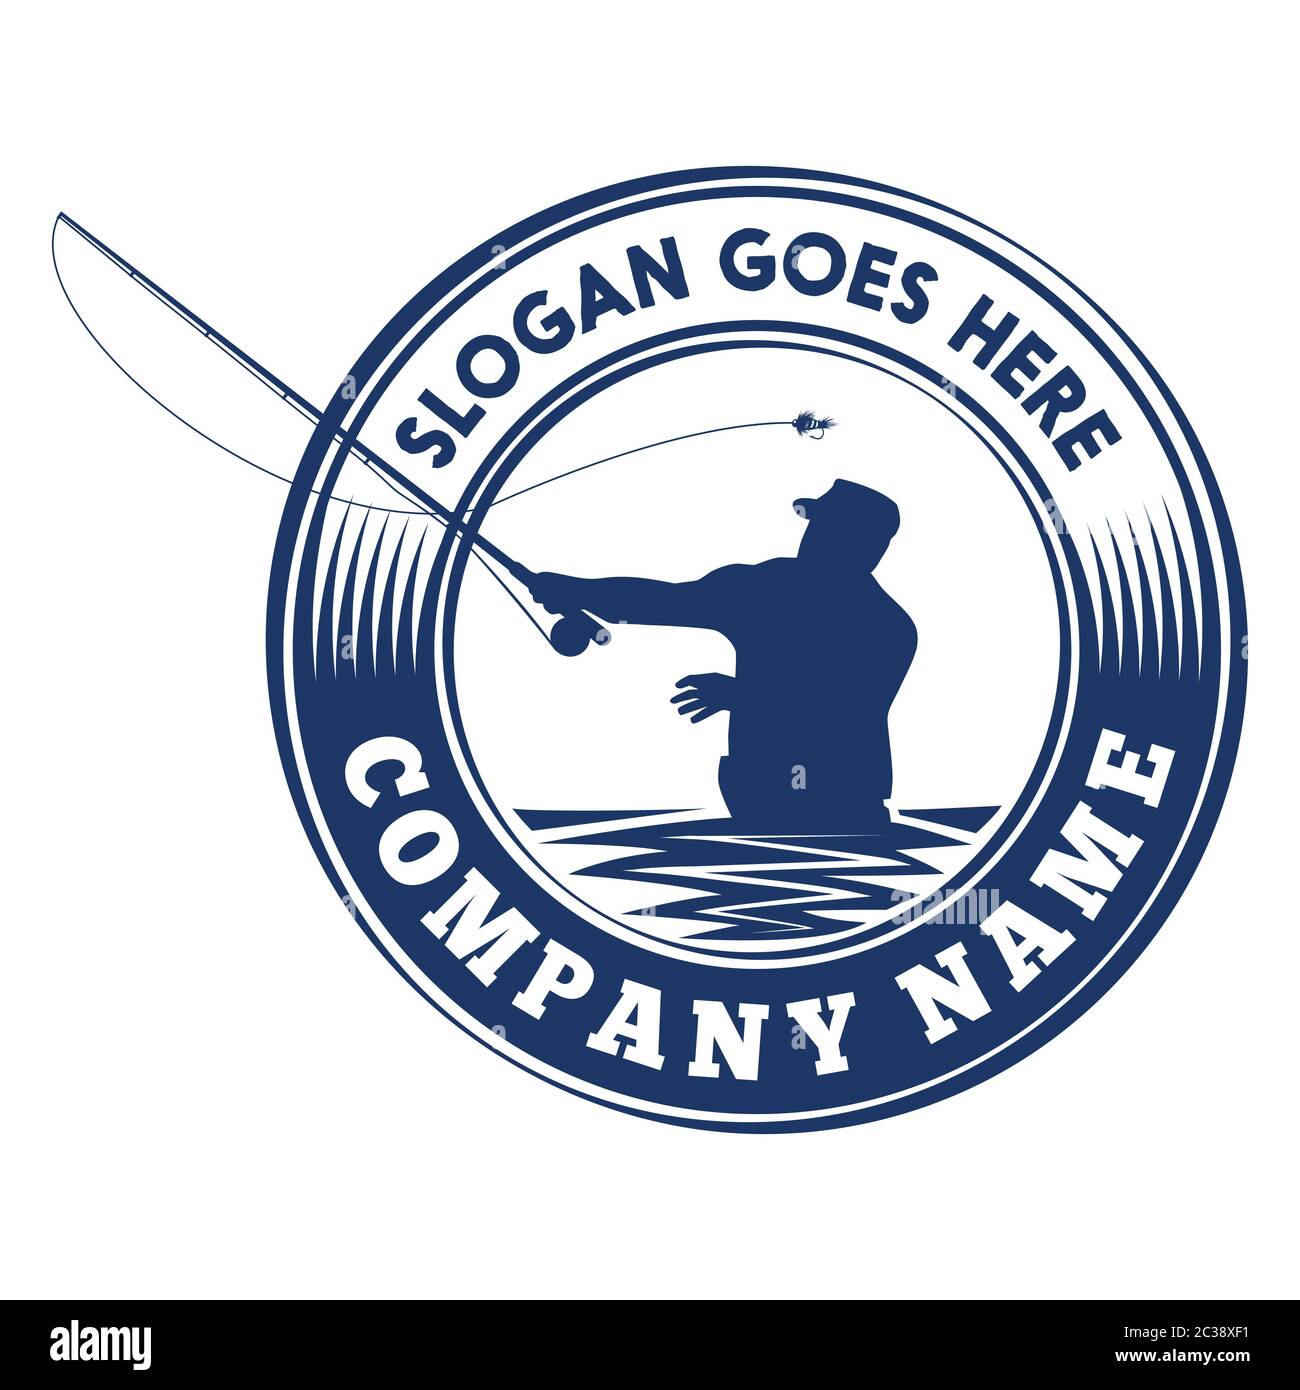 Lure Fishing logo exclusive design inspiration Stock Photo - Alamy